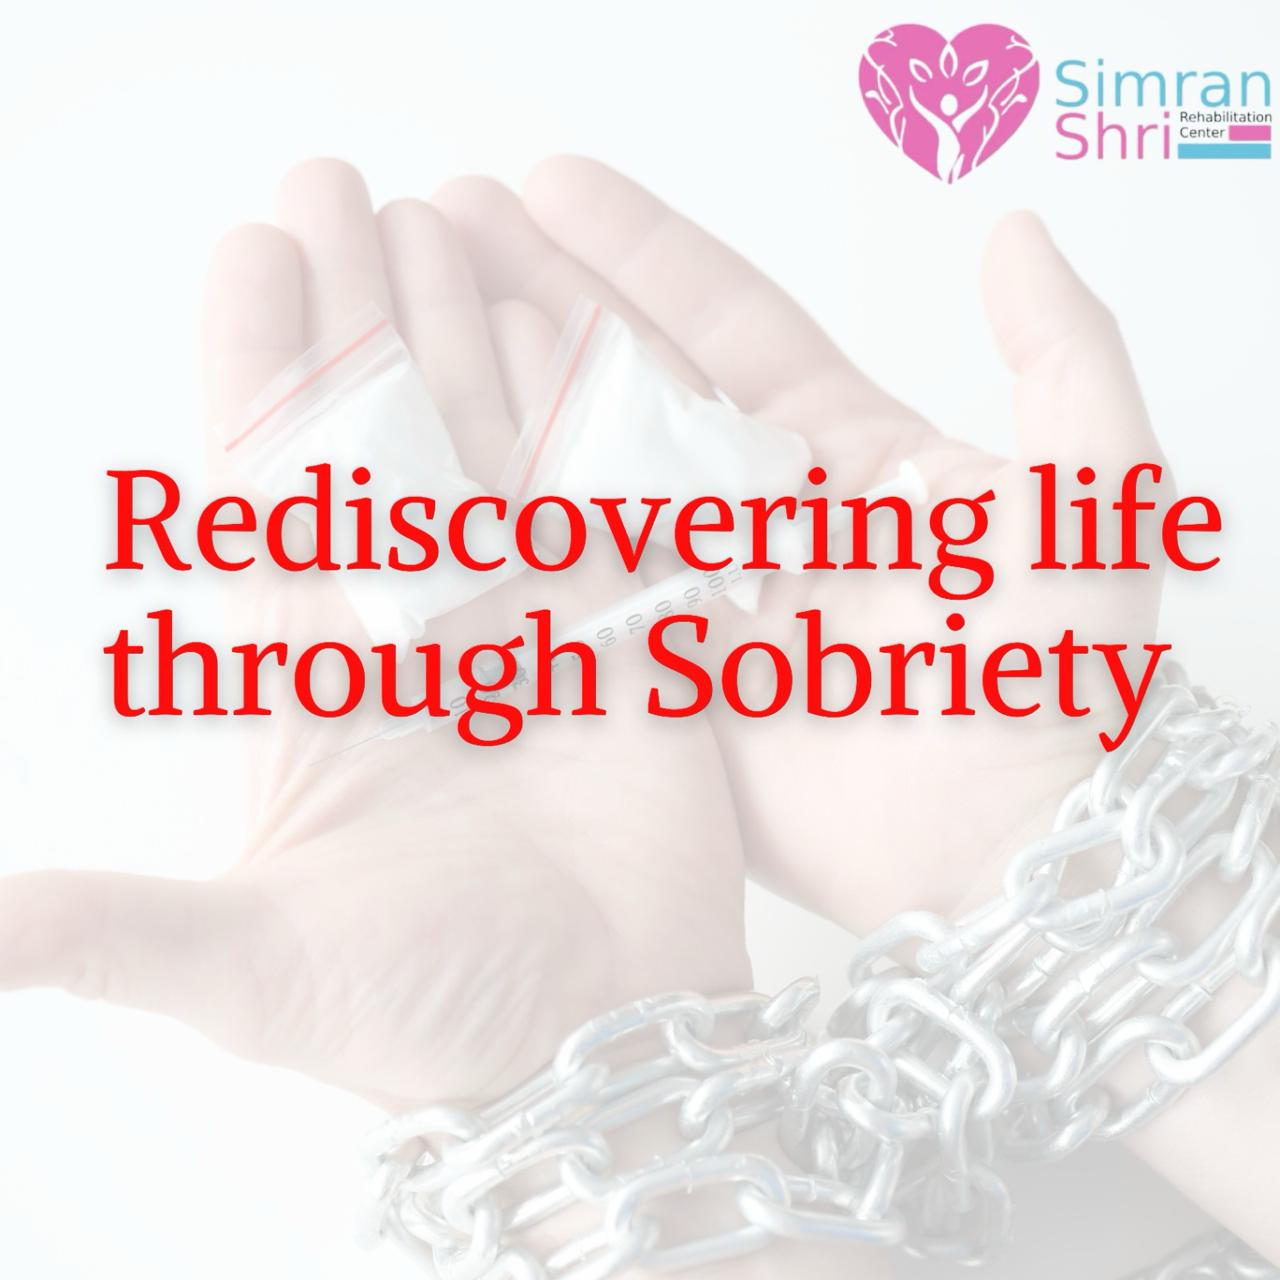 At Simranshri Drug Rehab Center, Rediscovering Life Through Sobriety